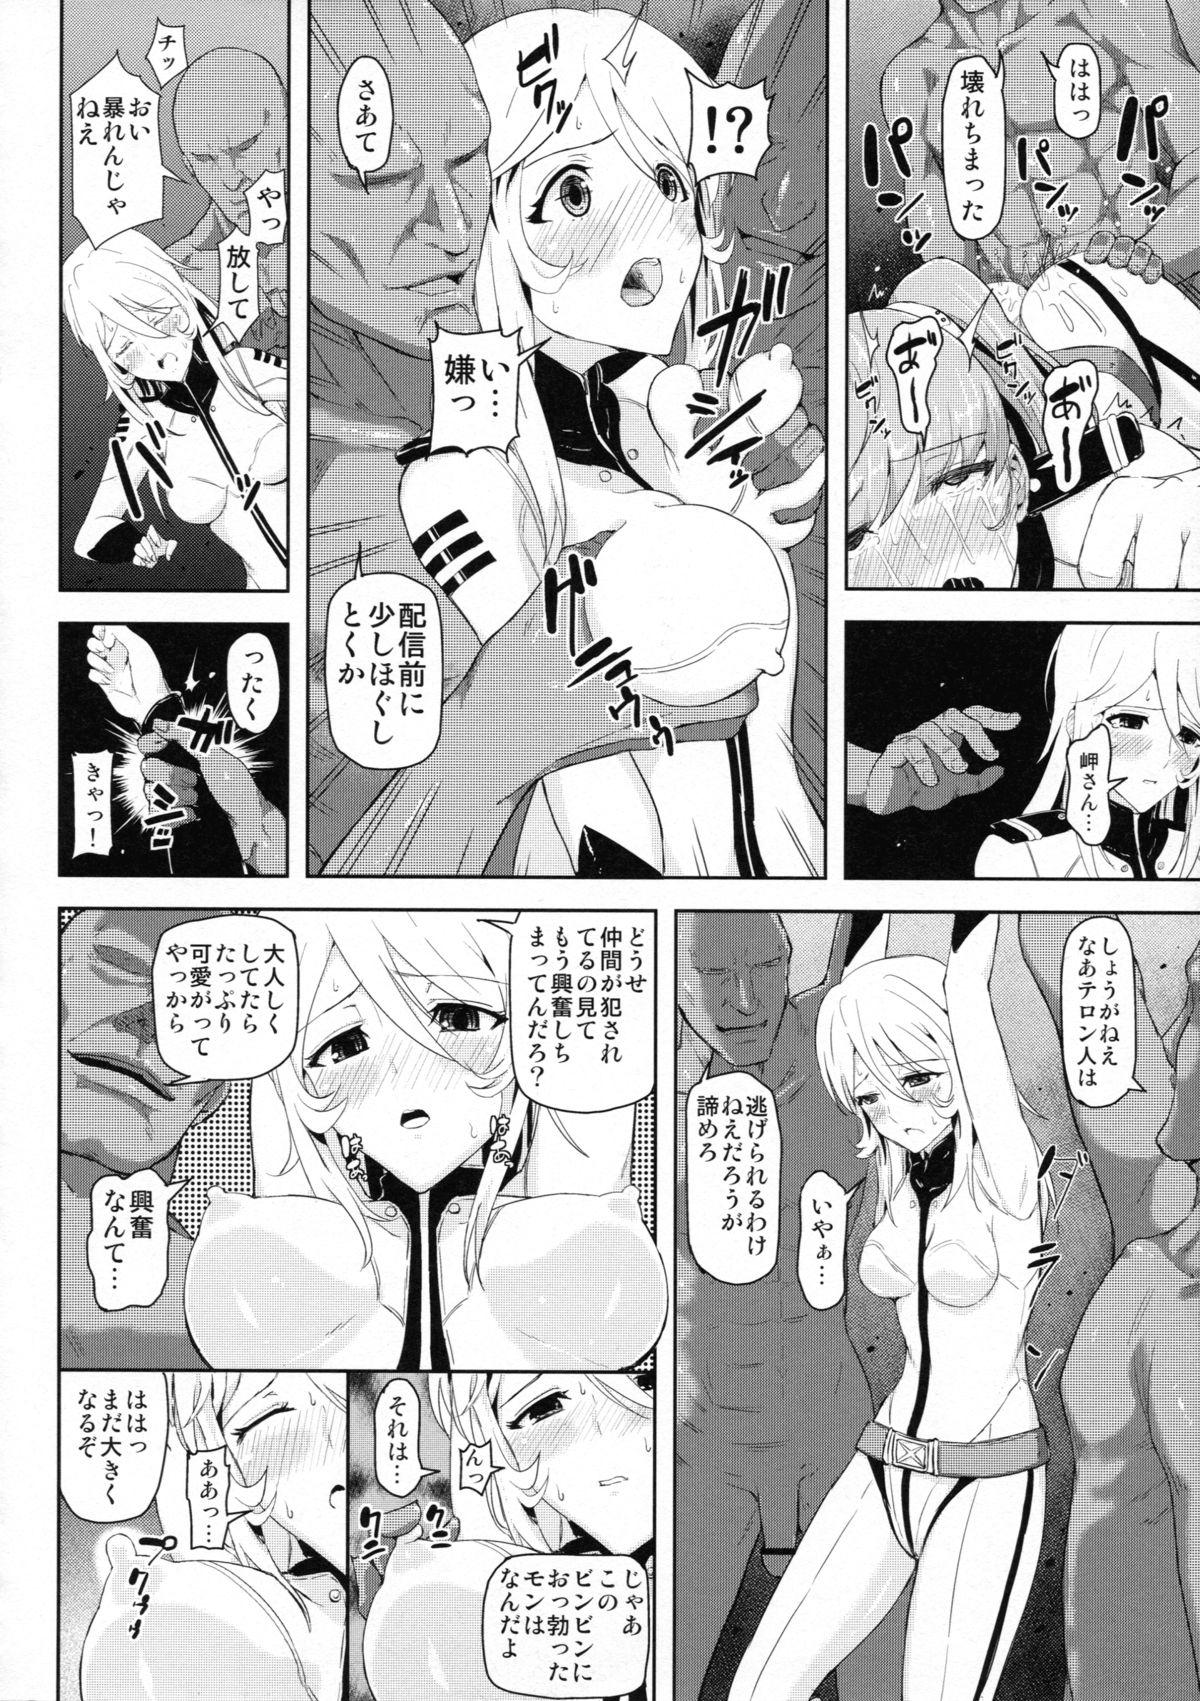 Gloryholes Teron no Ryoshuu - Space battleship yamato Sucks - Page 8